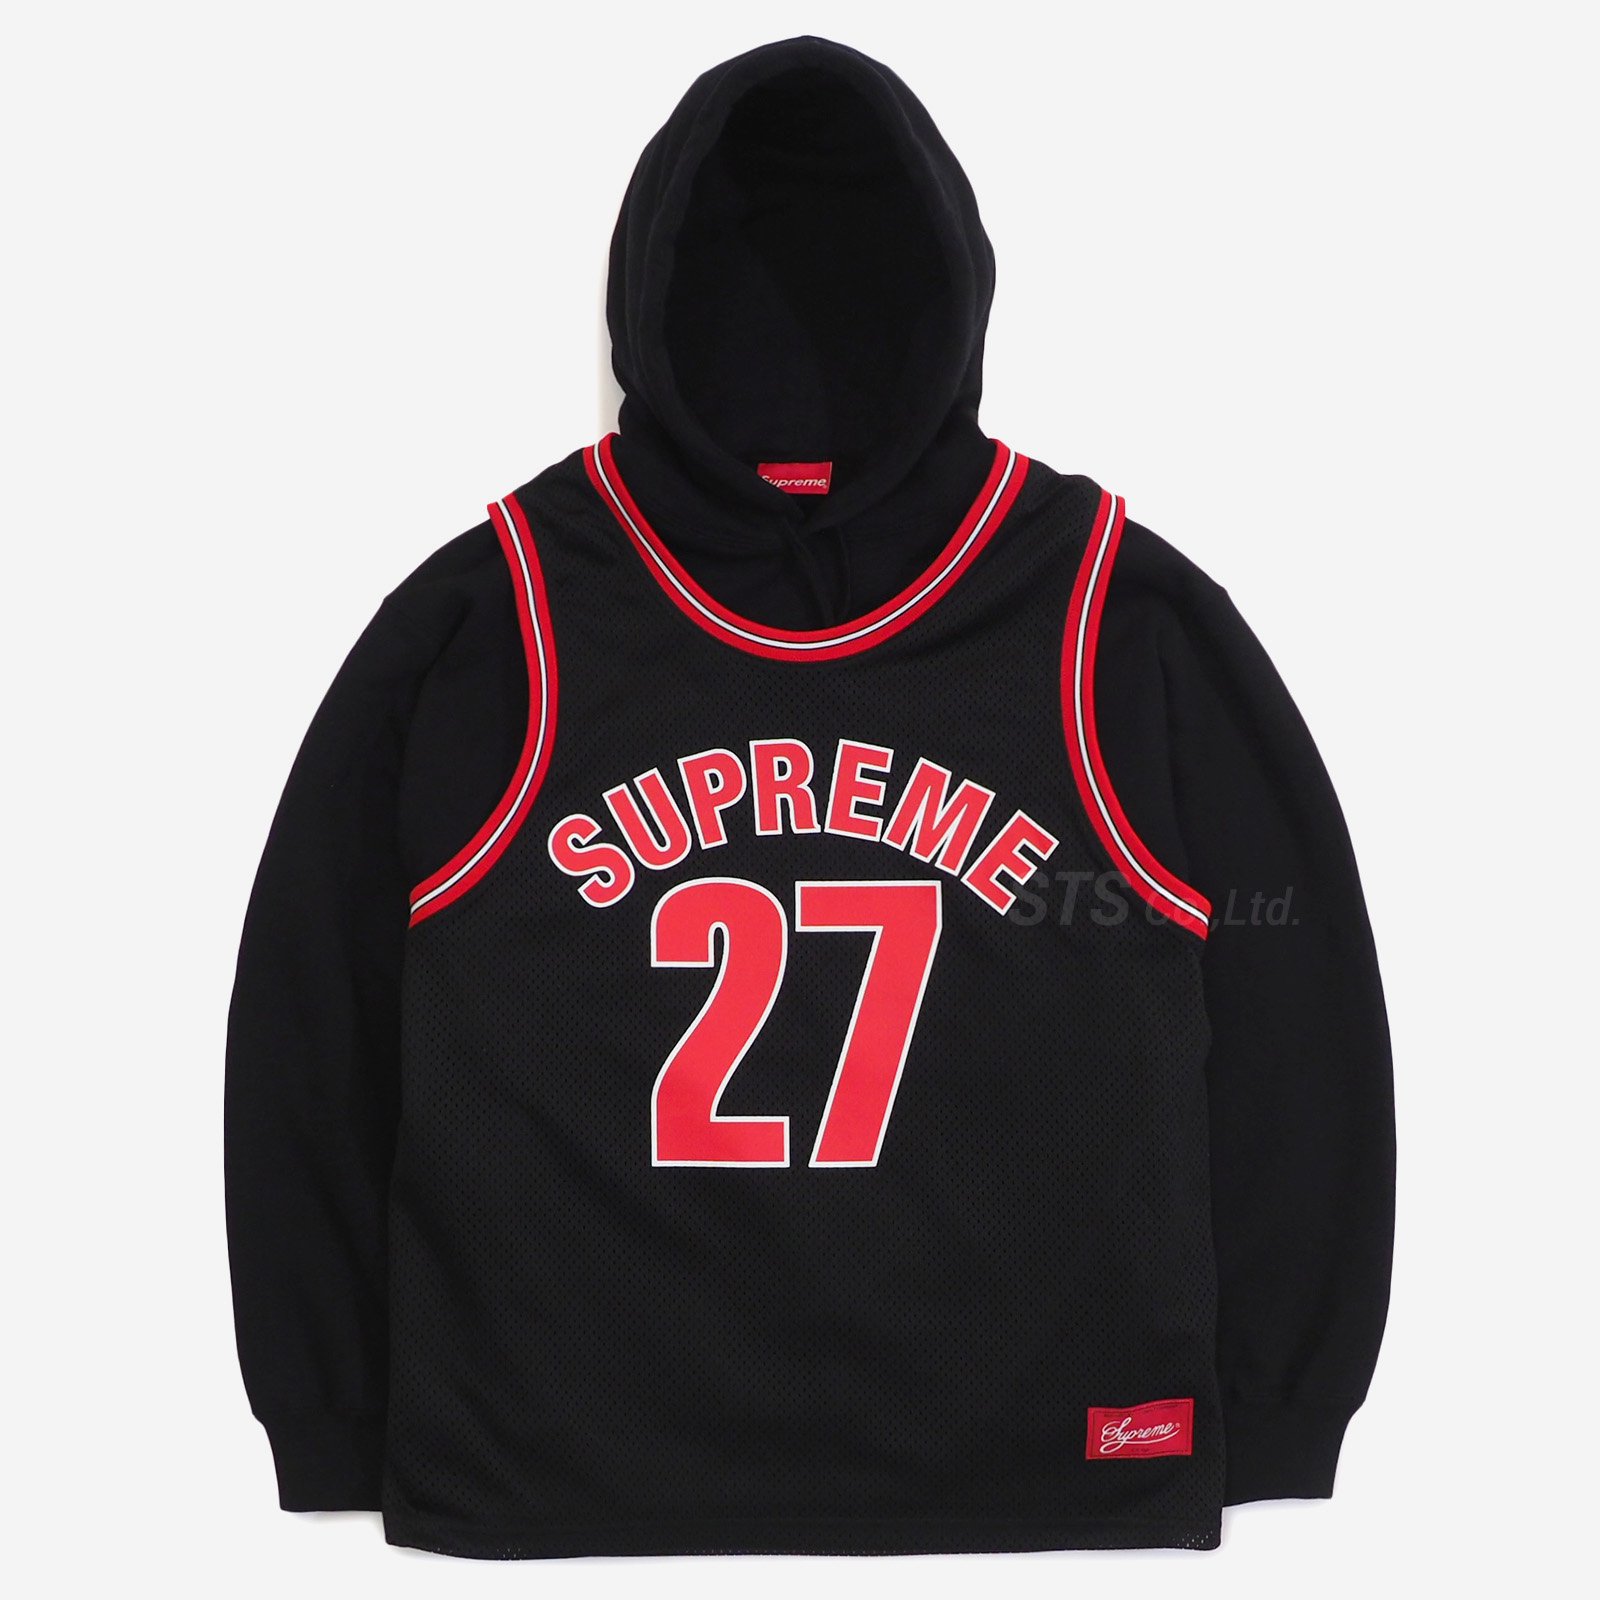 Supreme - Basketball Jersey Hooded Sweatshirt - ParkSIDER